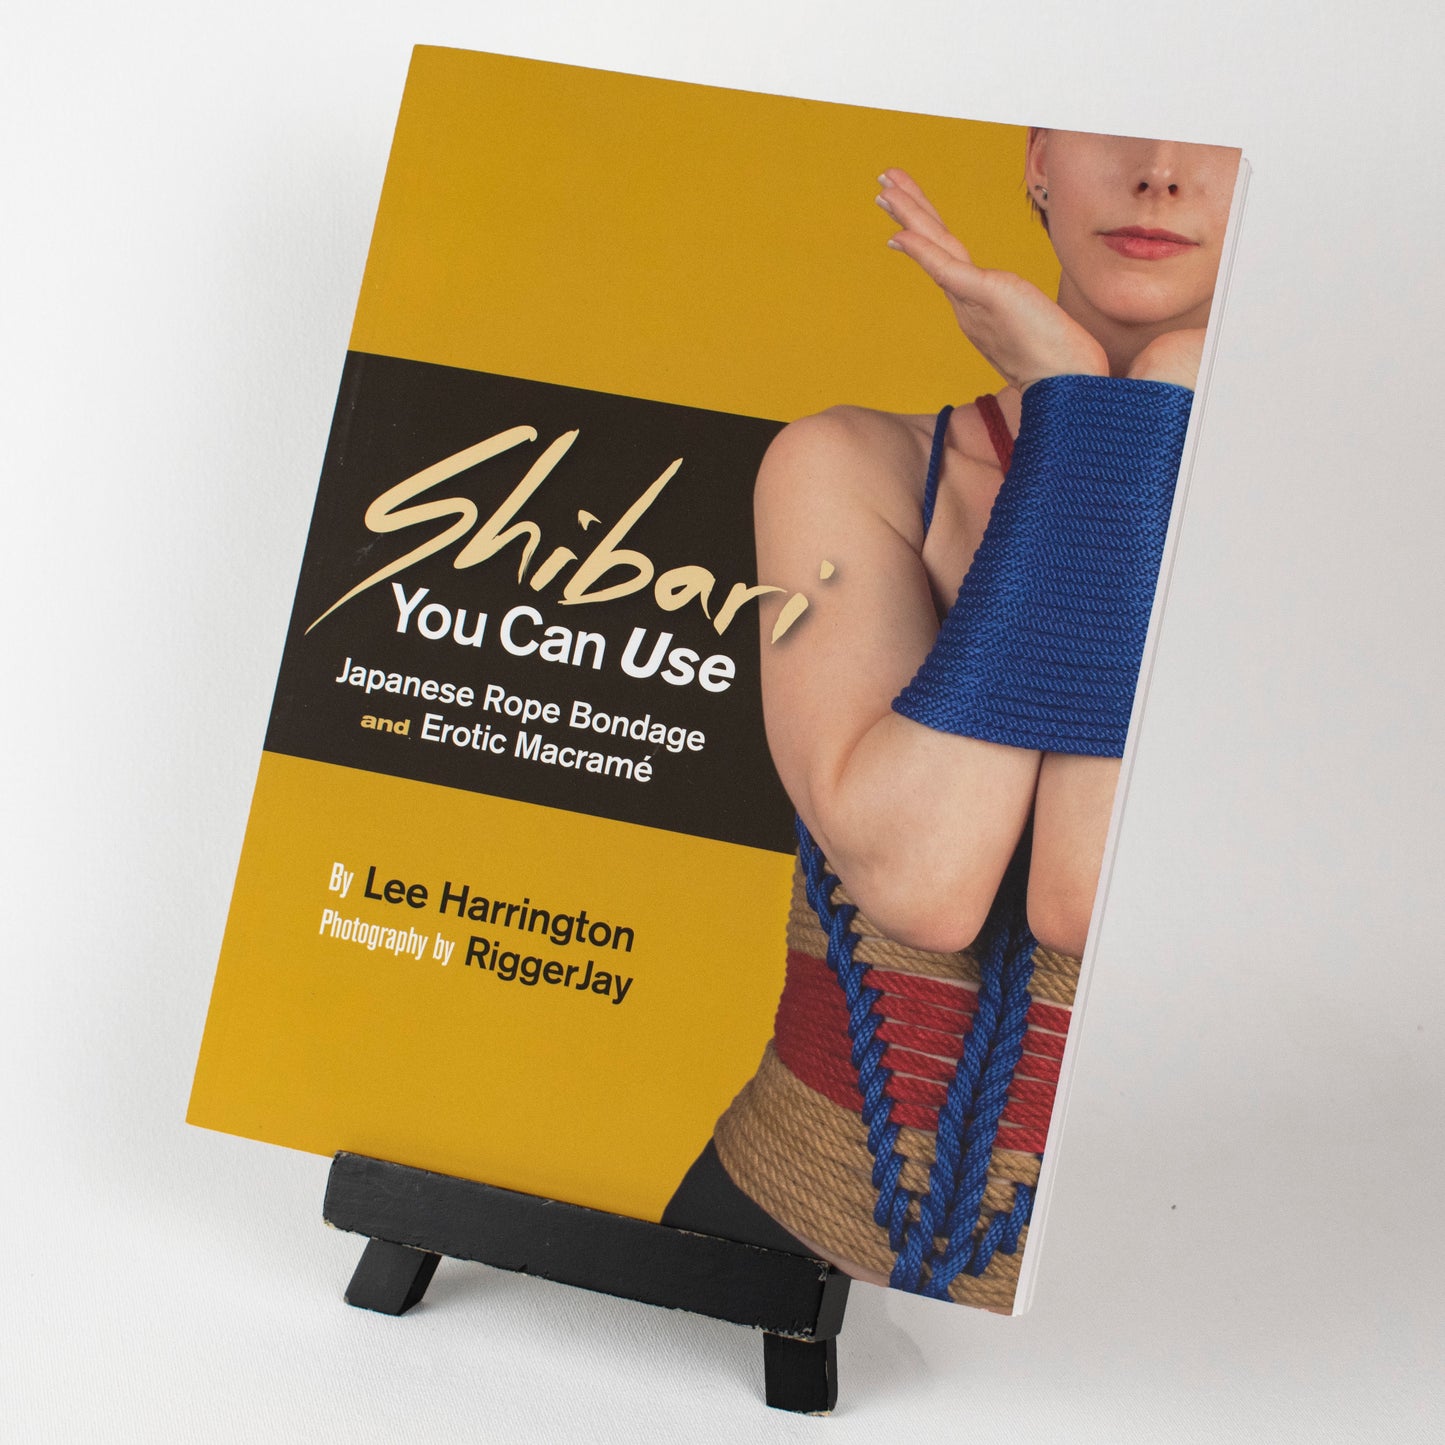 Book – Shibari You Can Use – by Lee Harrington  - English